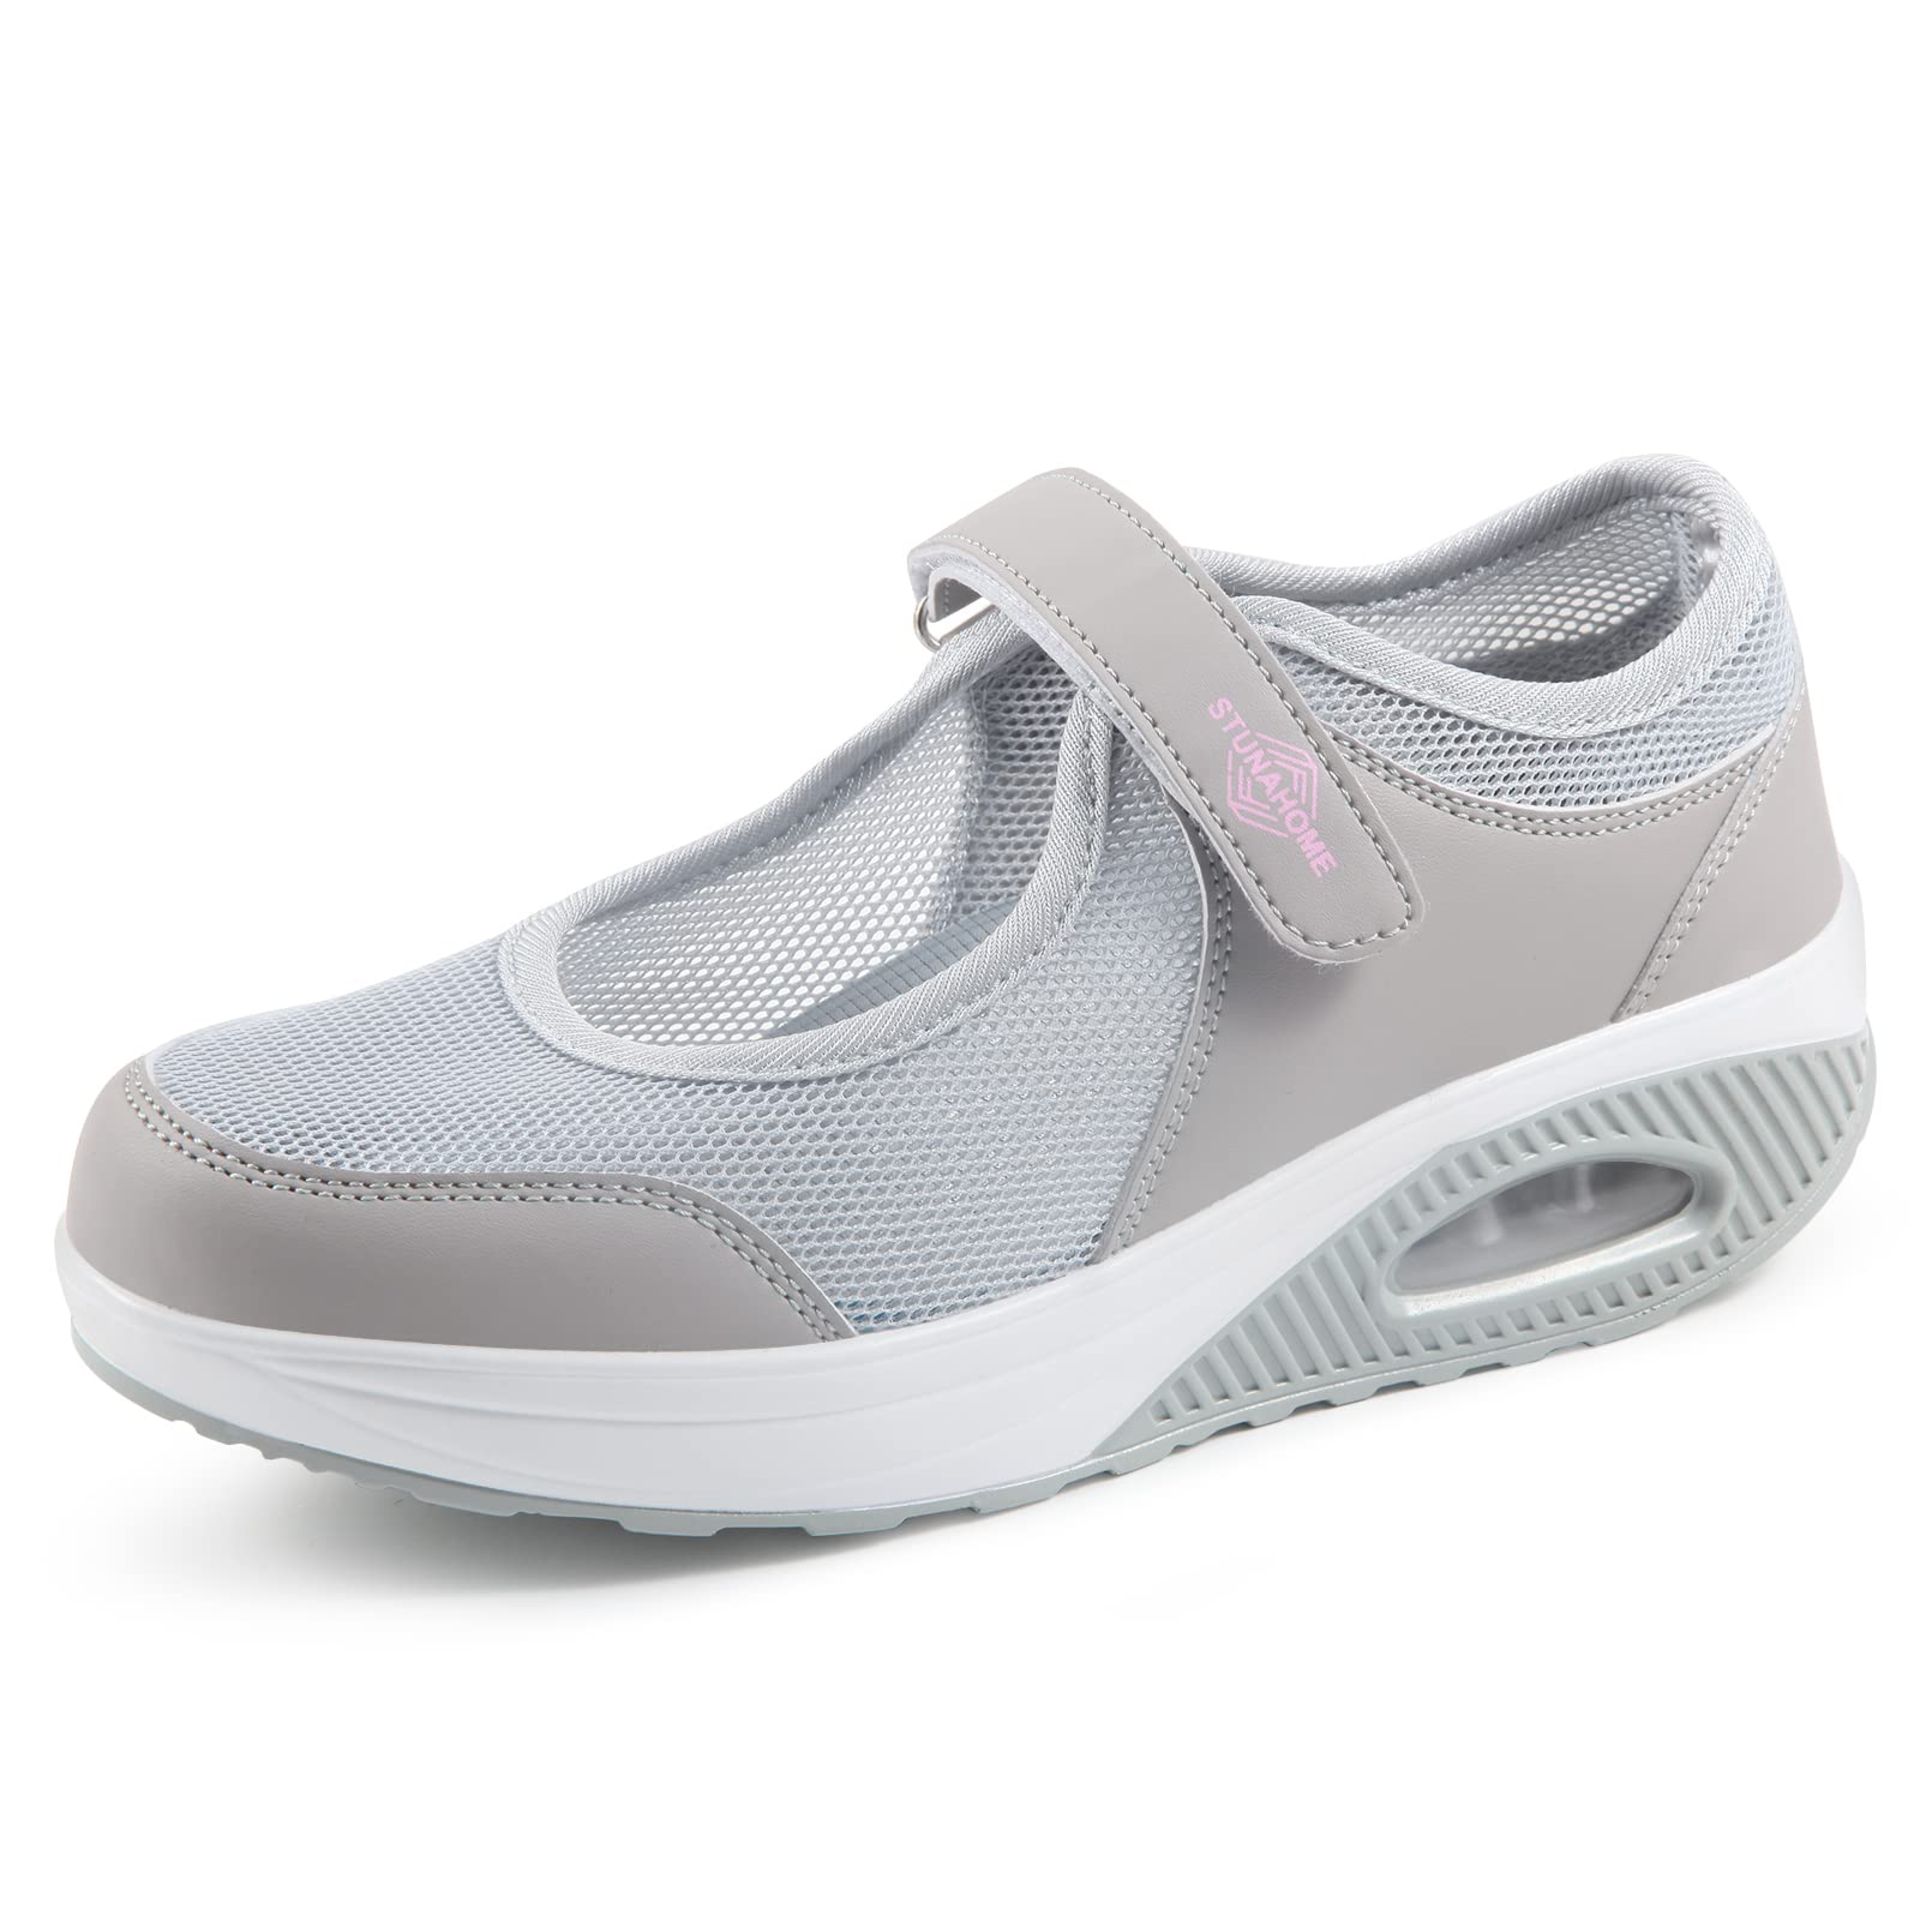 RRP £37.62 STUNAHOME Women's Orthopedic Air Cushion Shoes Casual